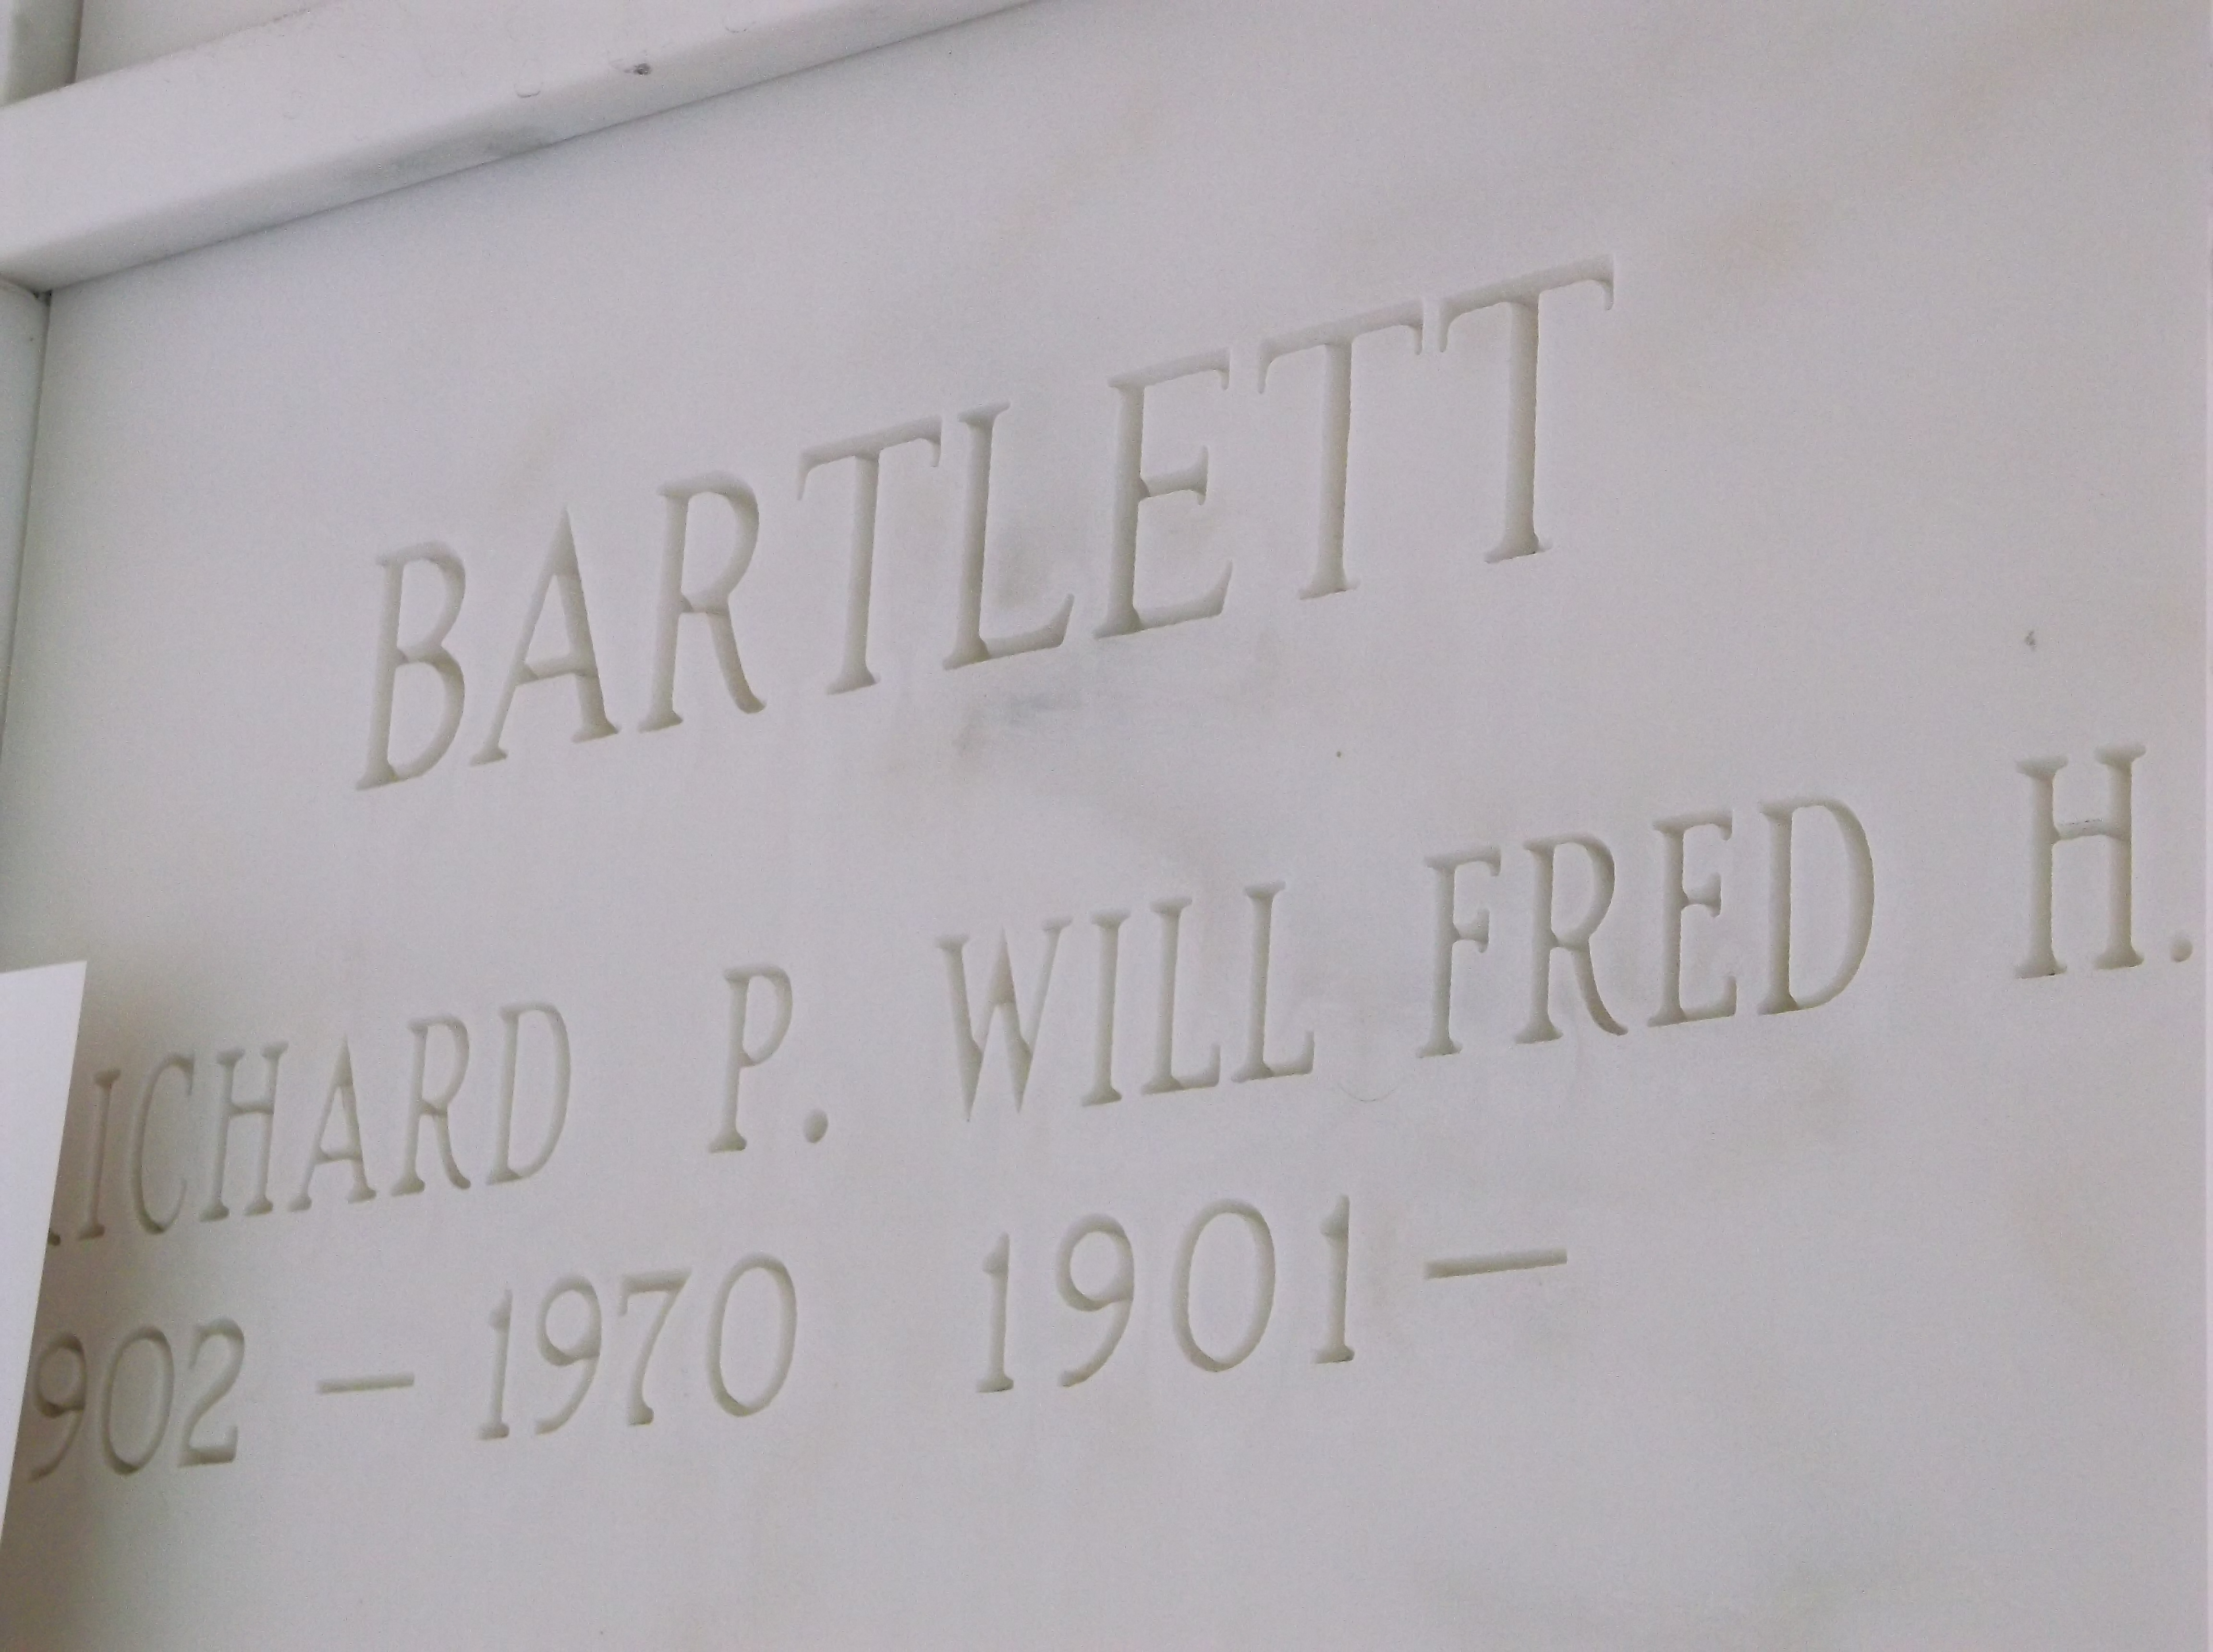 Will Fred H Bartlett